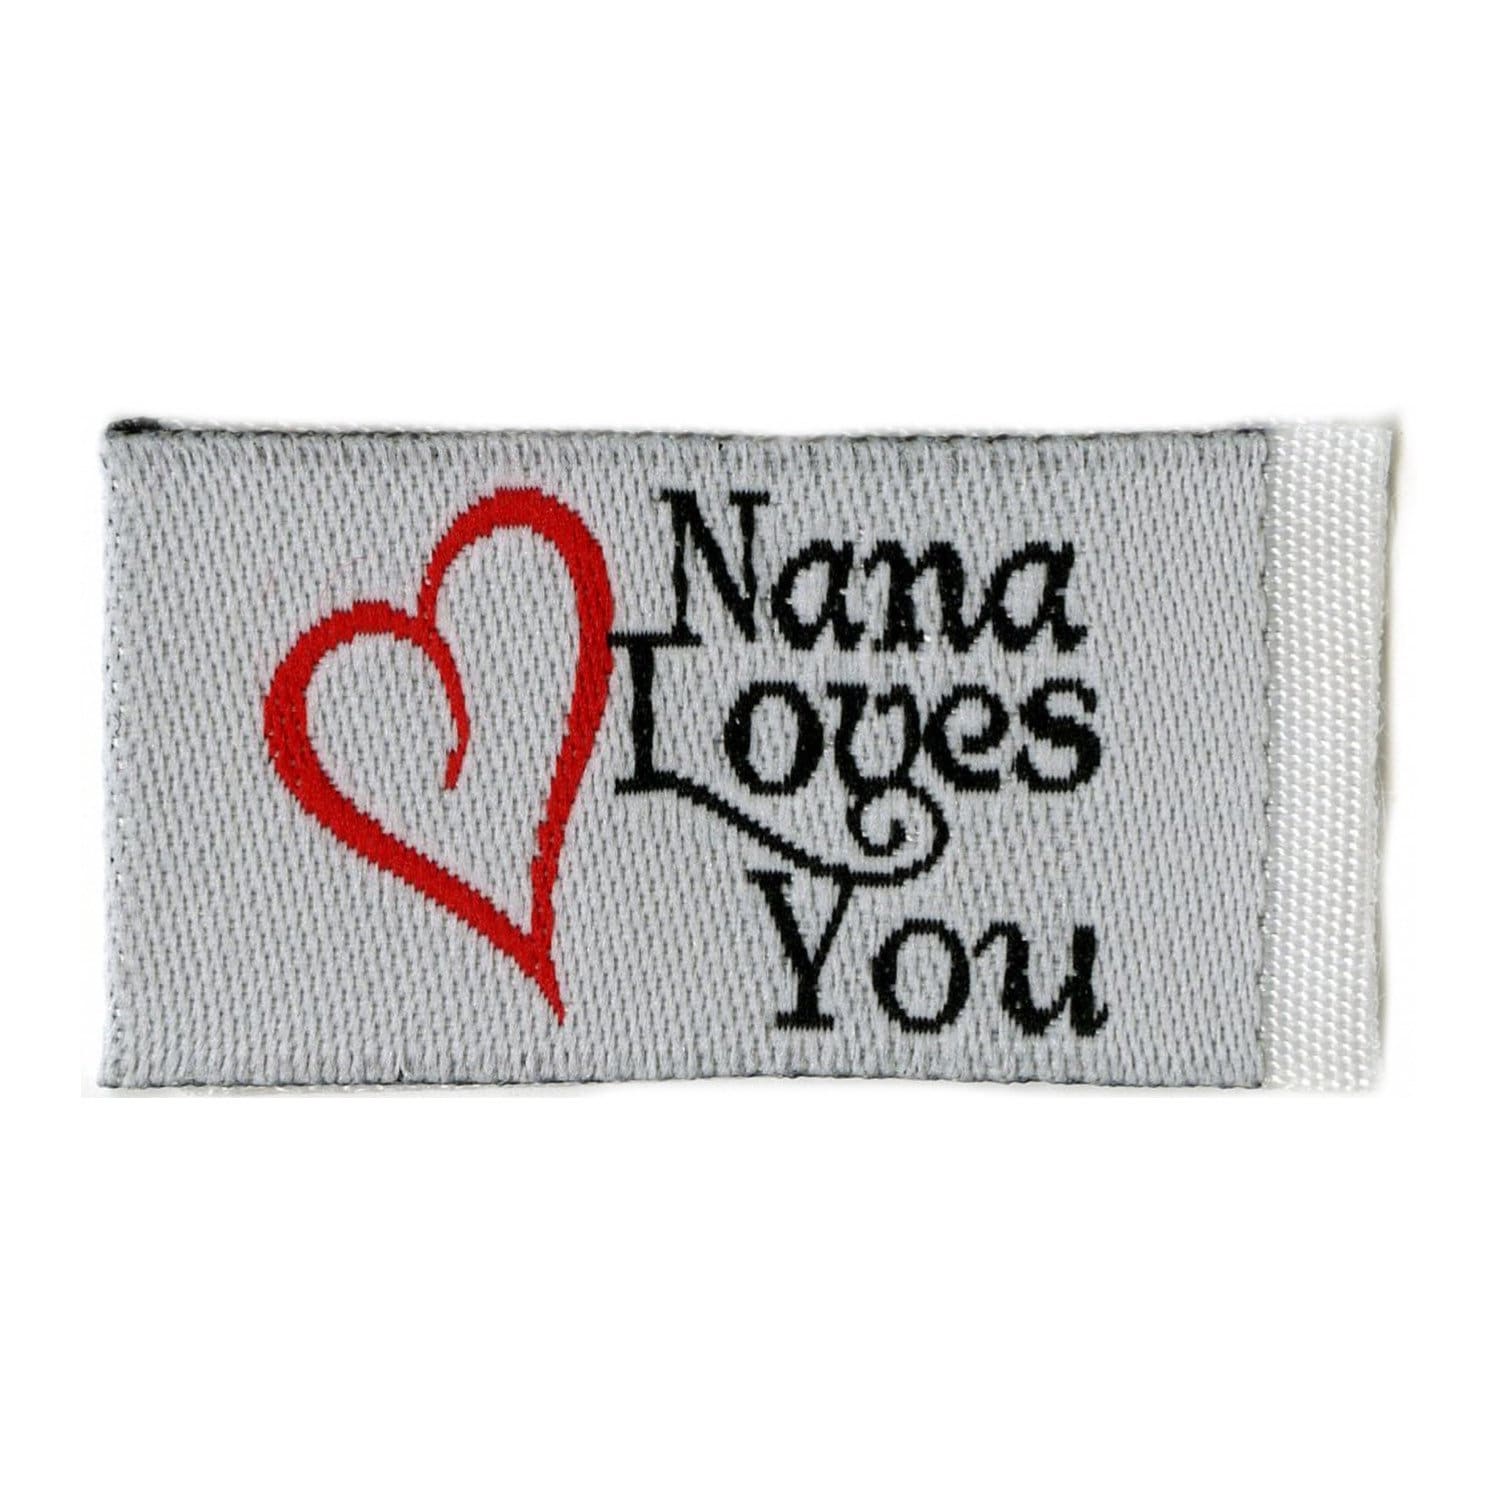 Nana Loves You Tag It Ons - Nana Loves You Quilt Labels